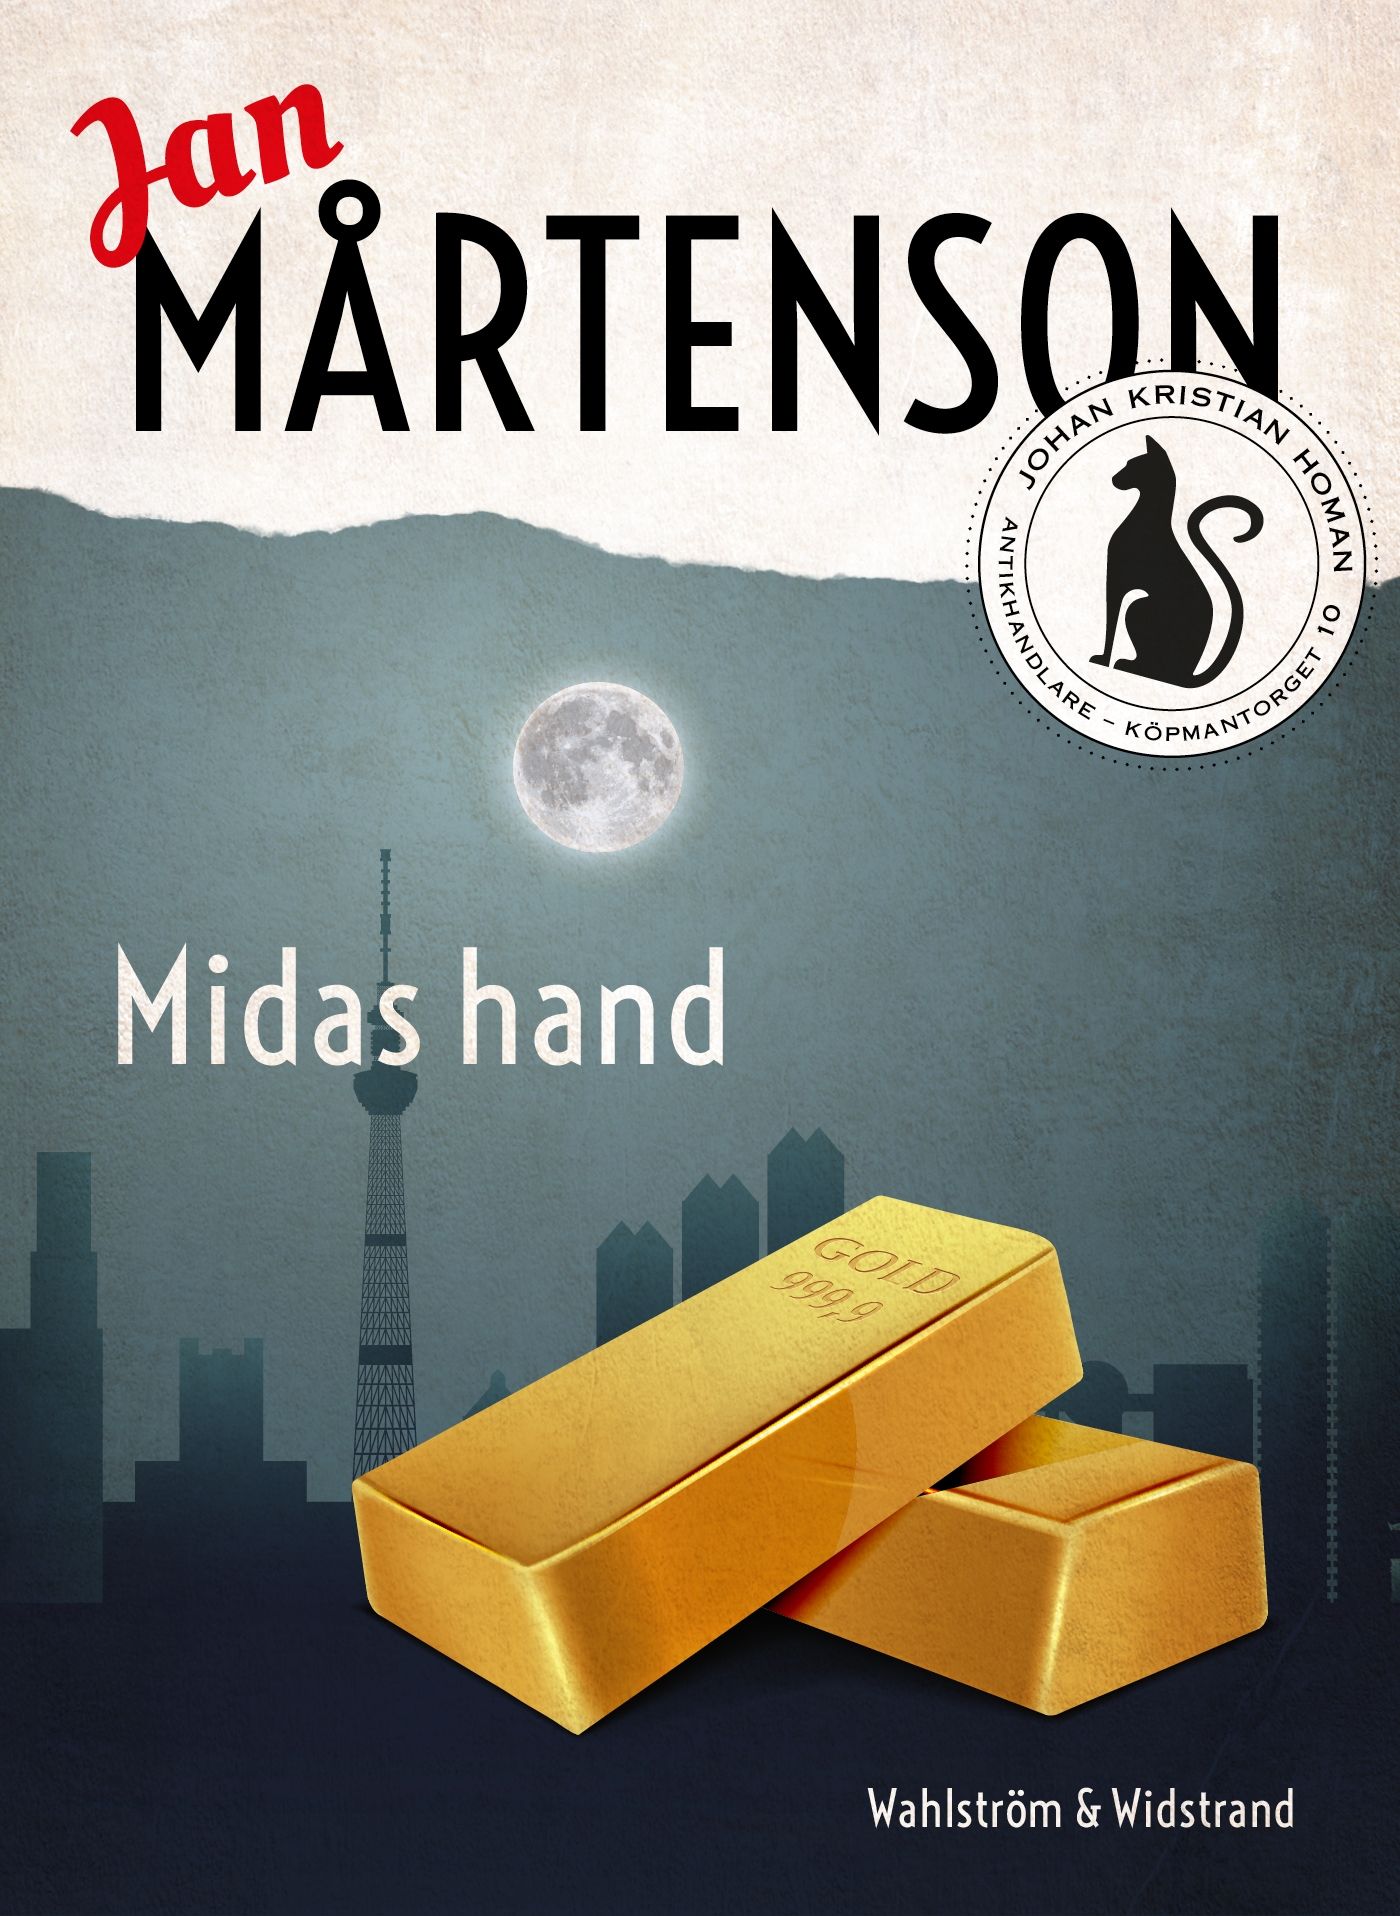 Midas hand, eBook by Jan Mårtenson